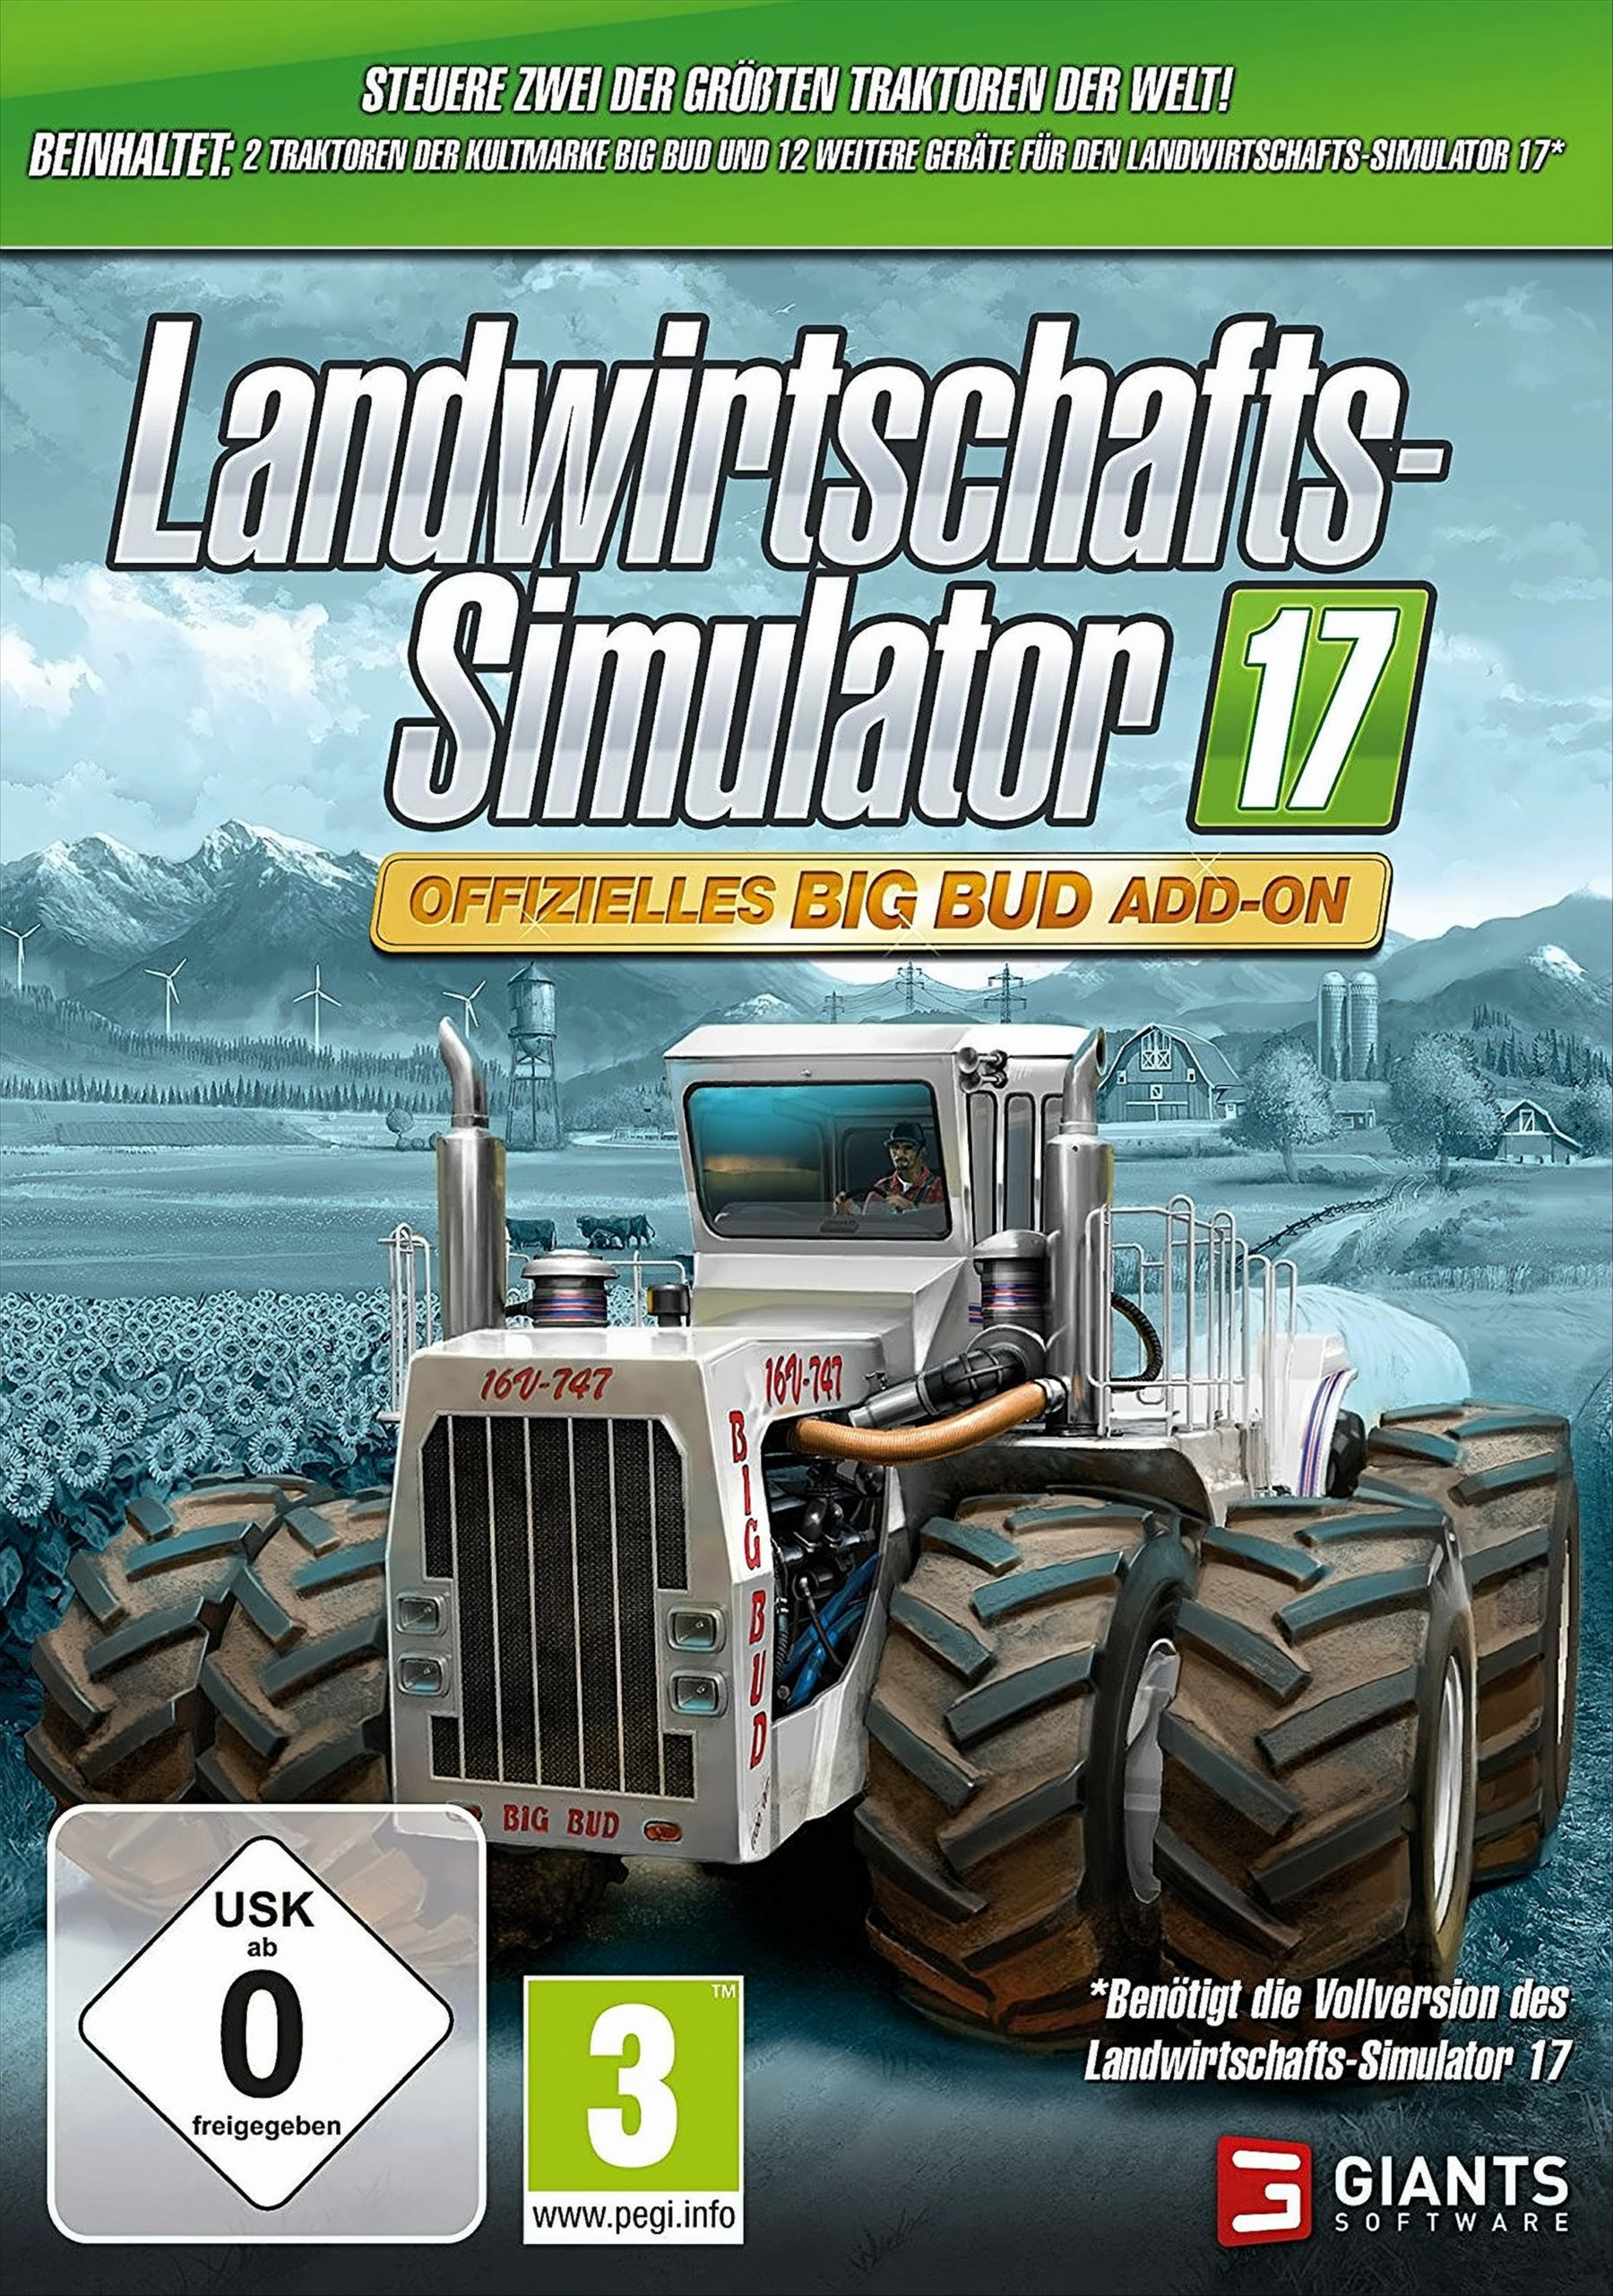 Landwirtschafts-Simulator 17: Offizielles Big - Bud Add-On [PC